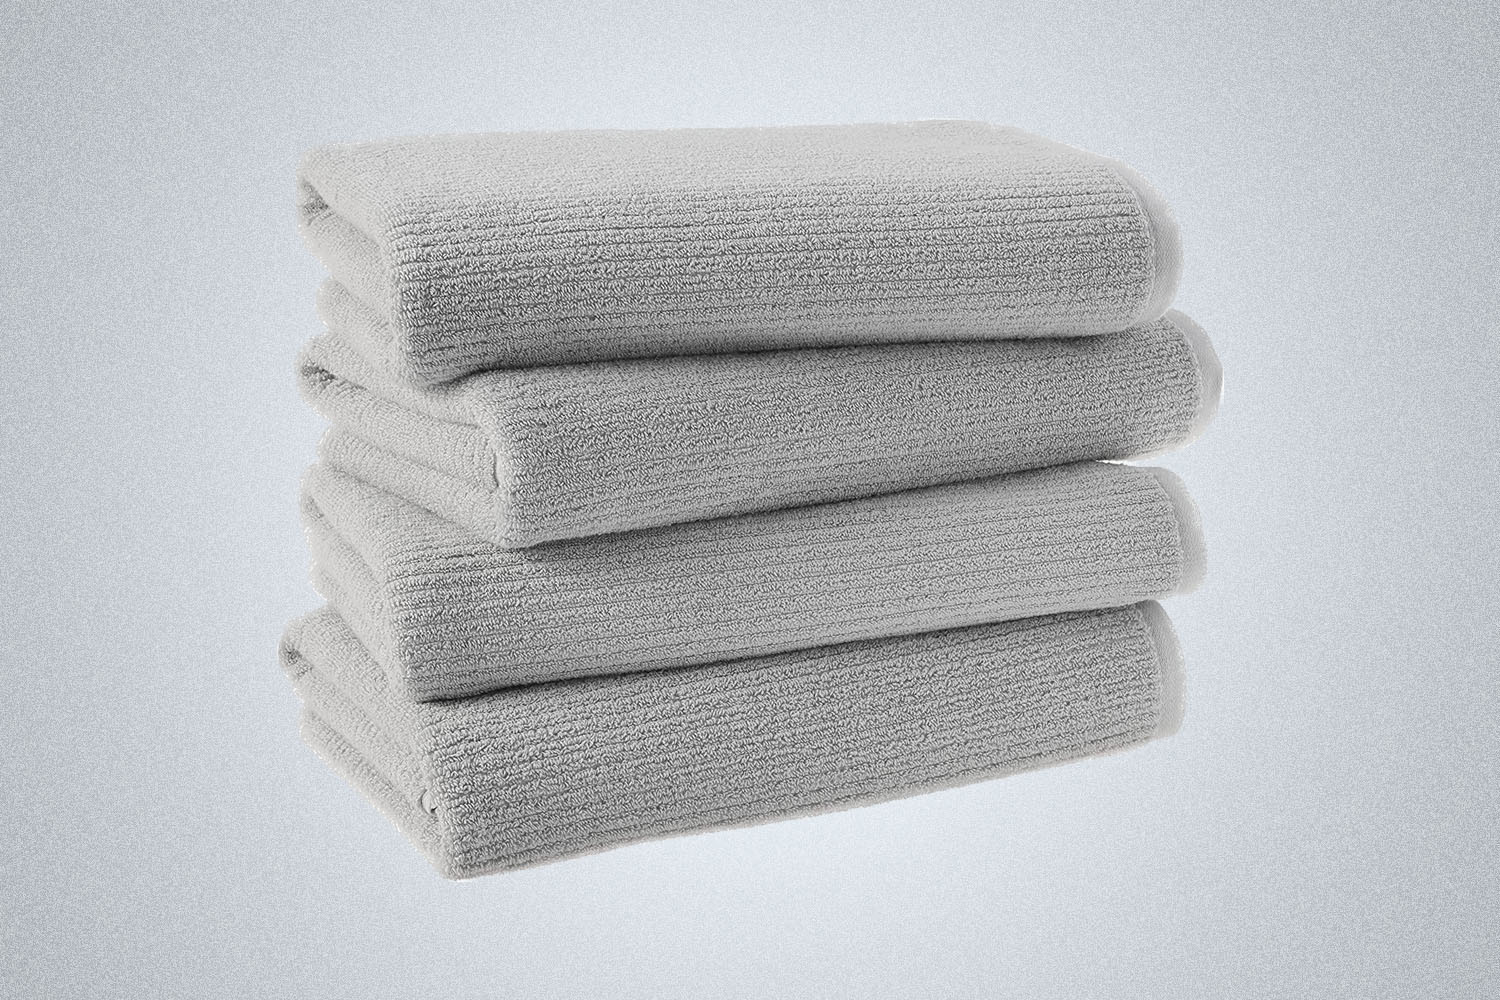 https://www.insidehook.com/wp-content/uploads/2023/05/Amazon-Aware-100-Organic-Cotton-Ribbed-Bath-Towels-.jpg?fit=1200%2C800